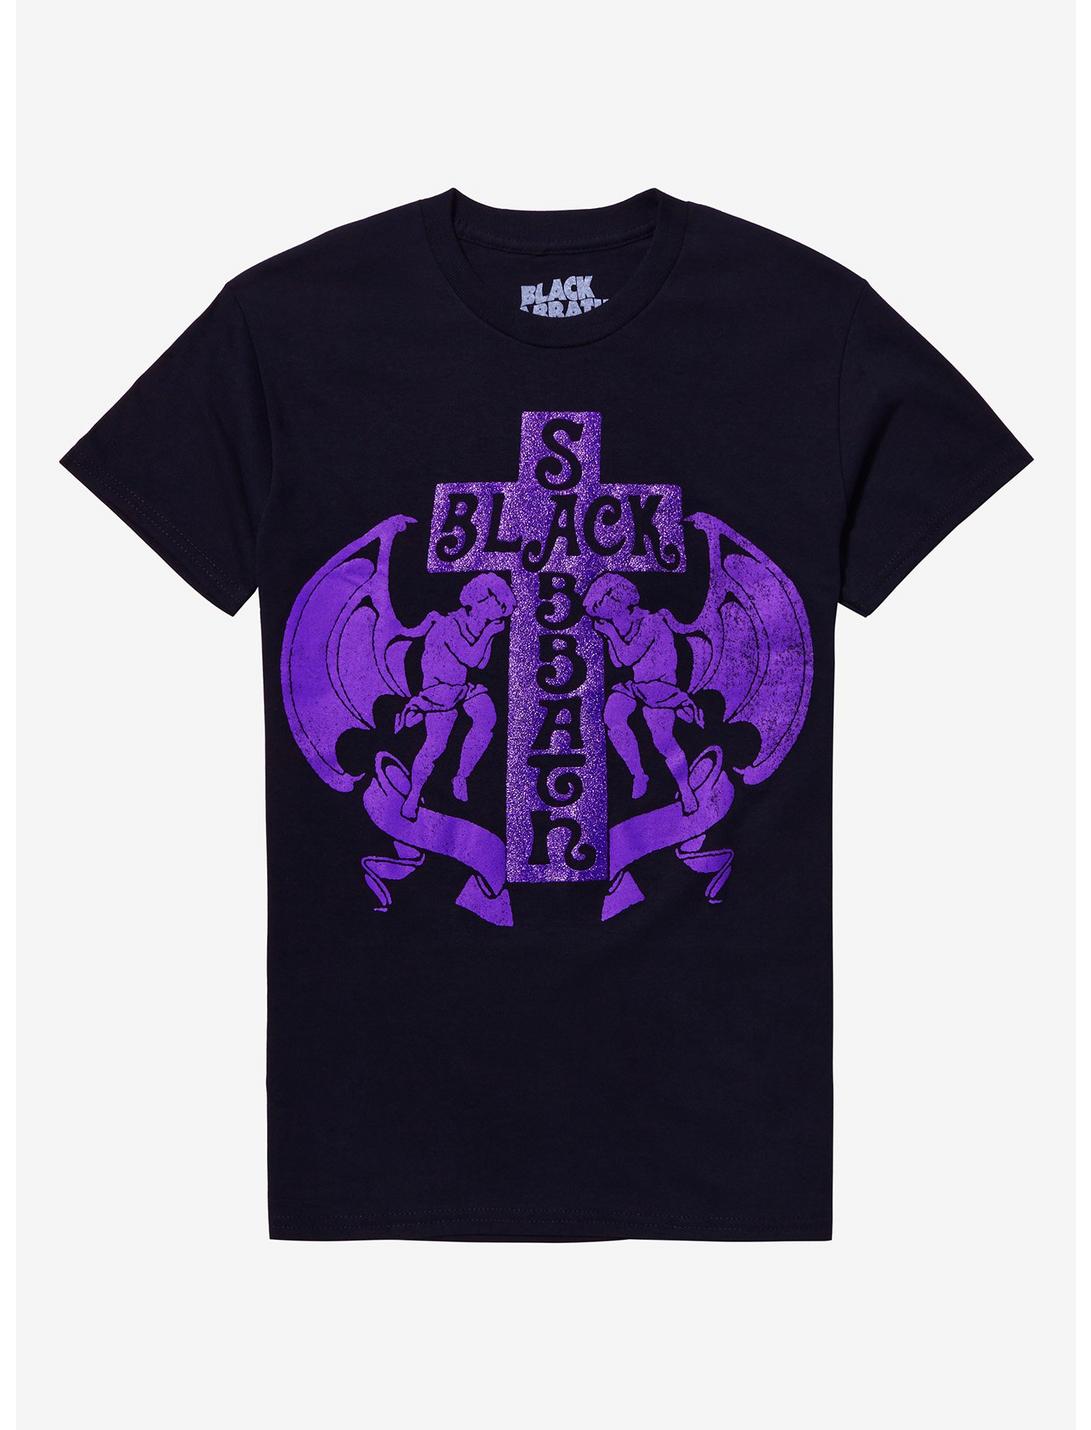 Black Sabbath Crying Angels Cross Boyfriend Fit Girls T-Shirt | Hot Topic